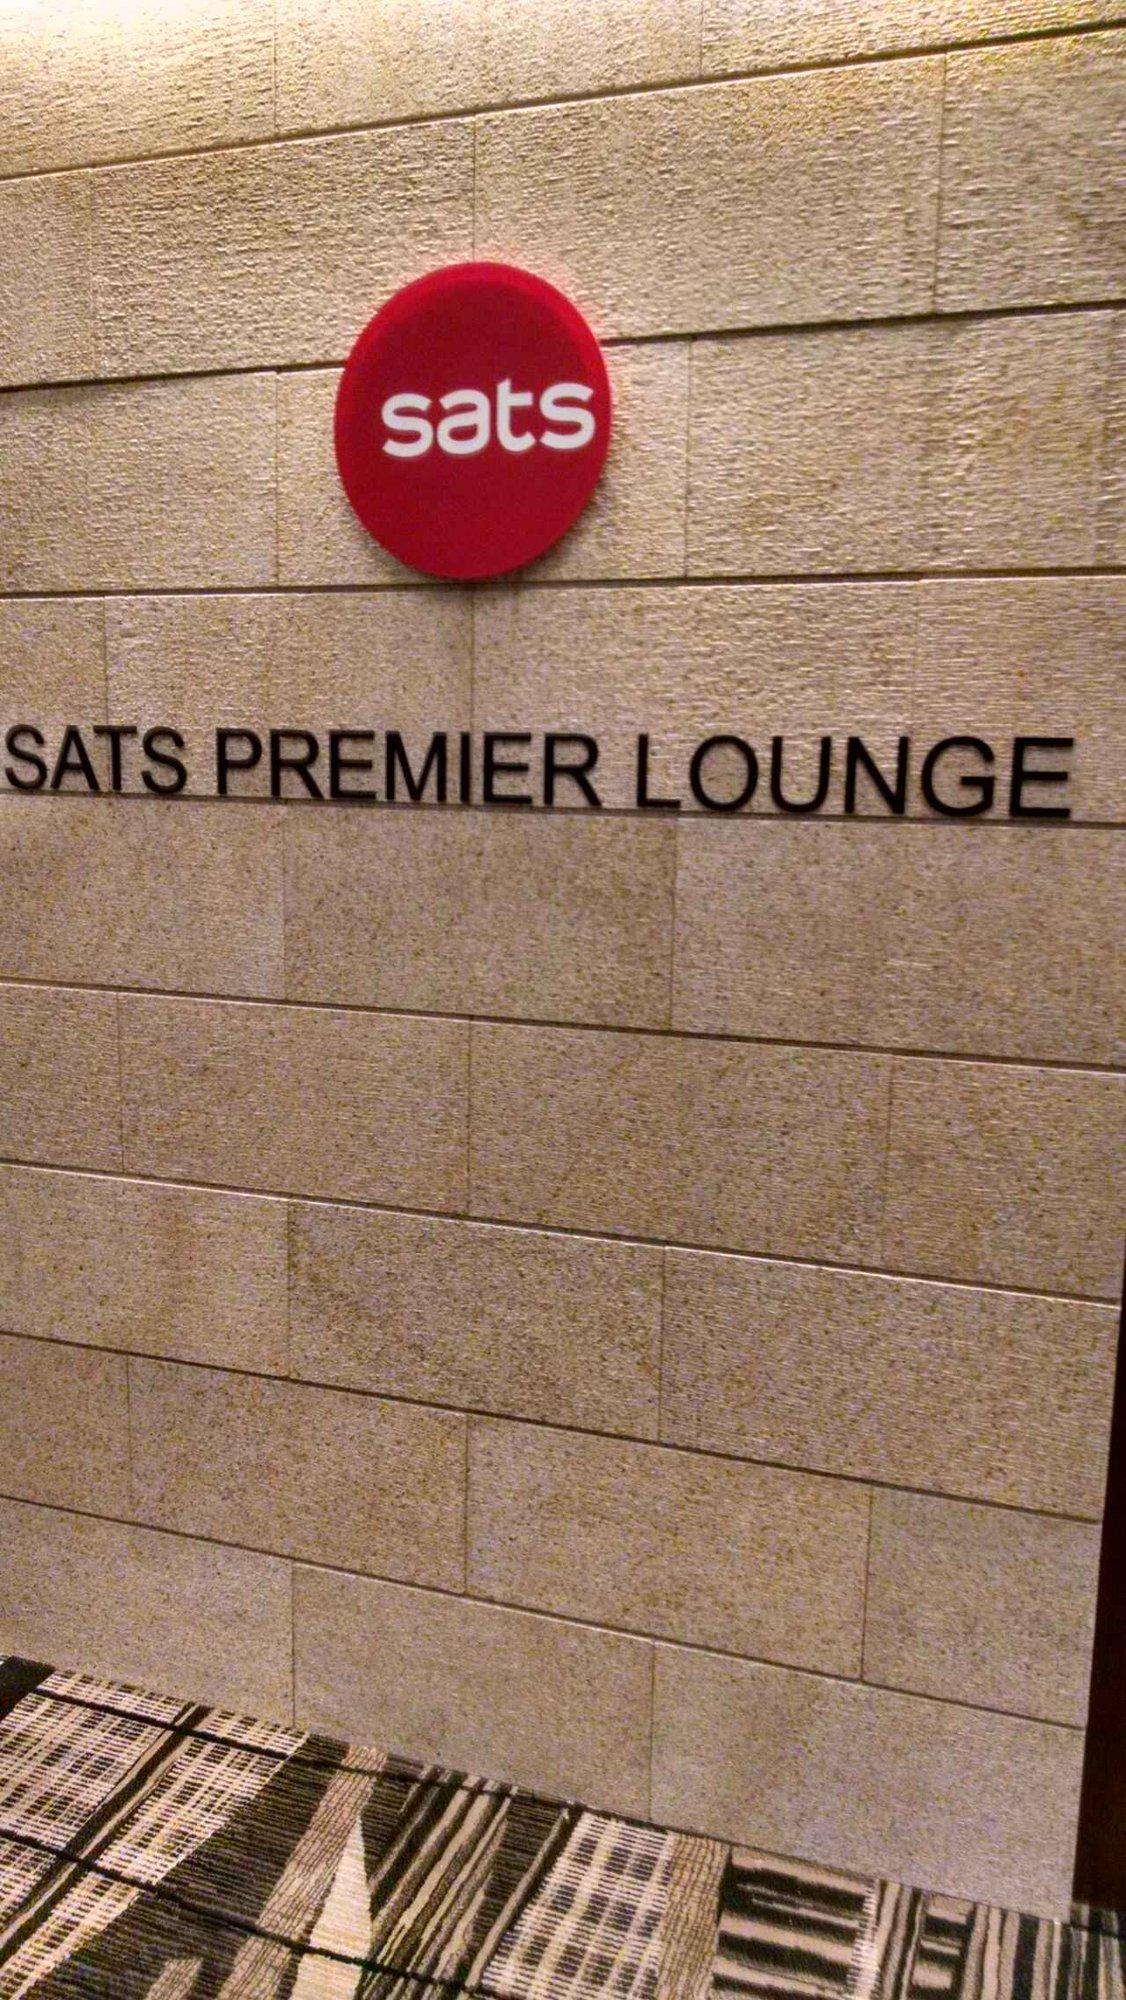 SATS Premier Lounge image 14 of 61